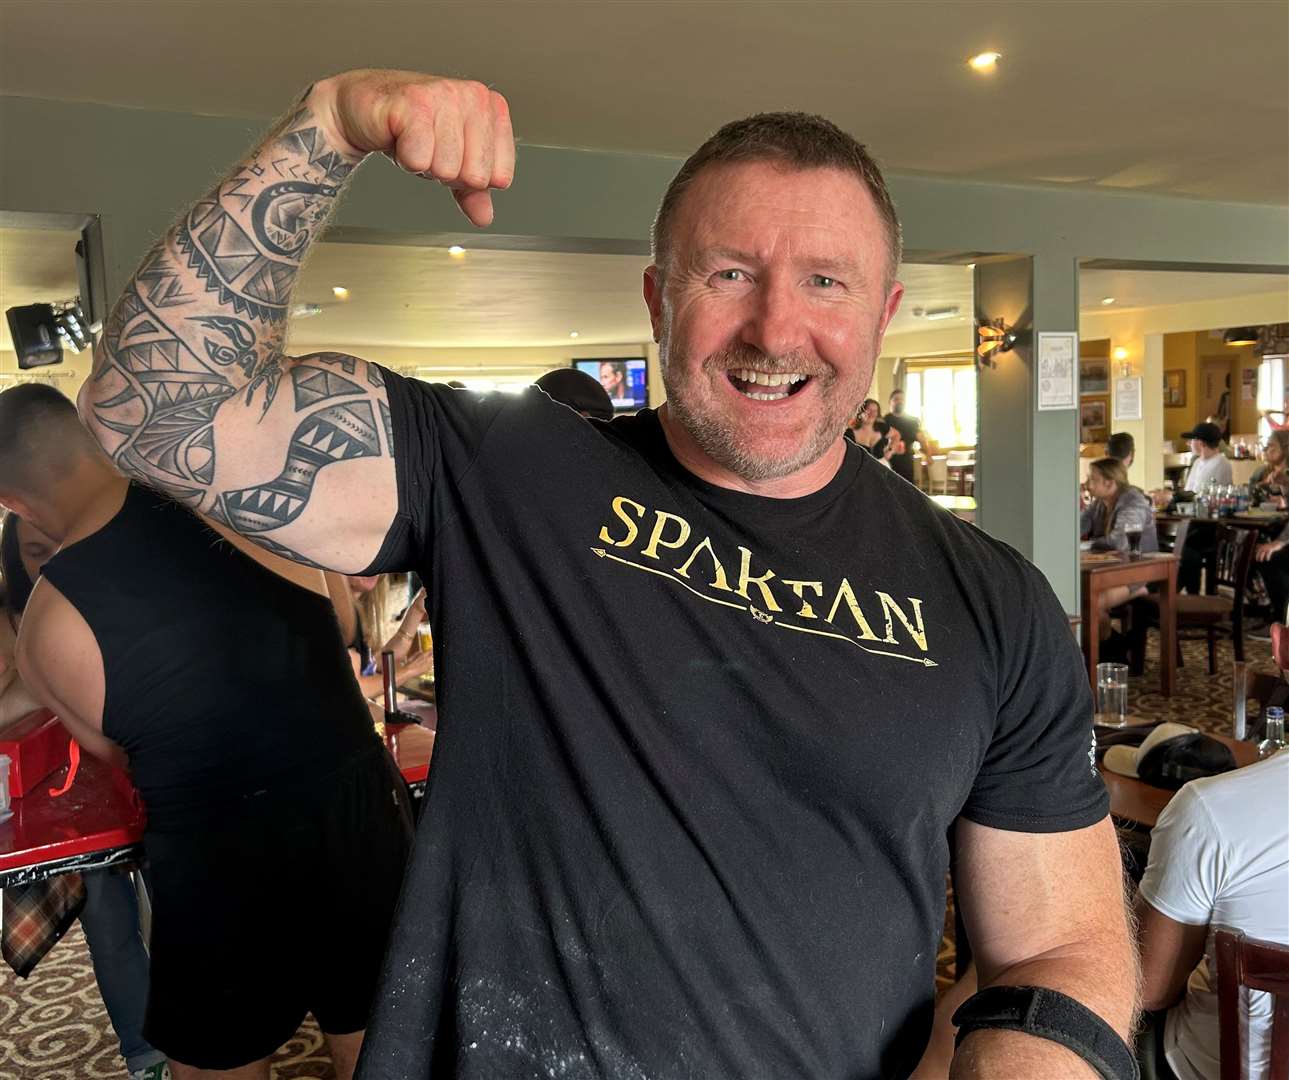 Mark Waldon, 53, is the current European arm wrestling champion